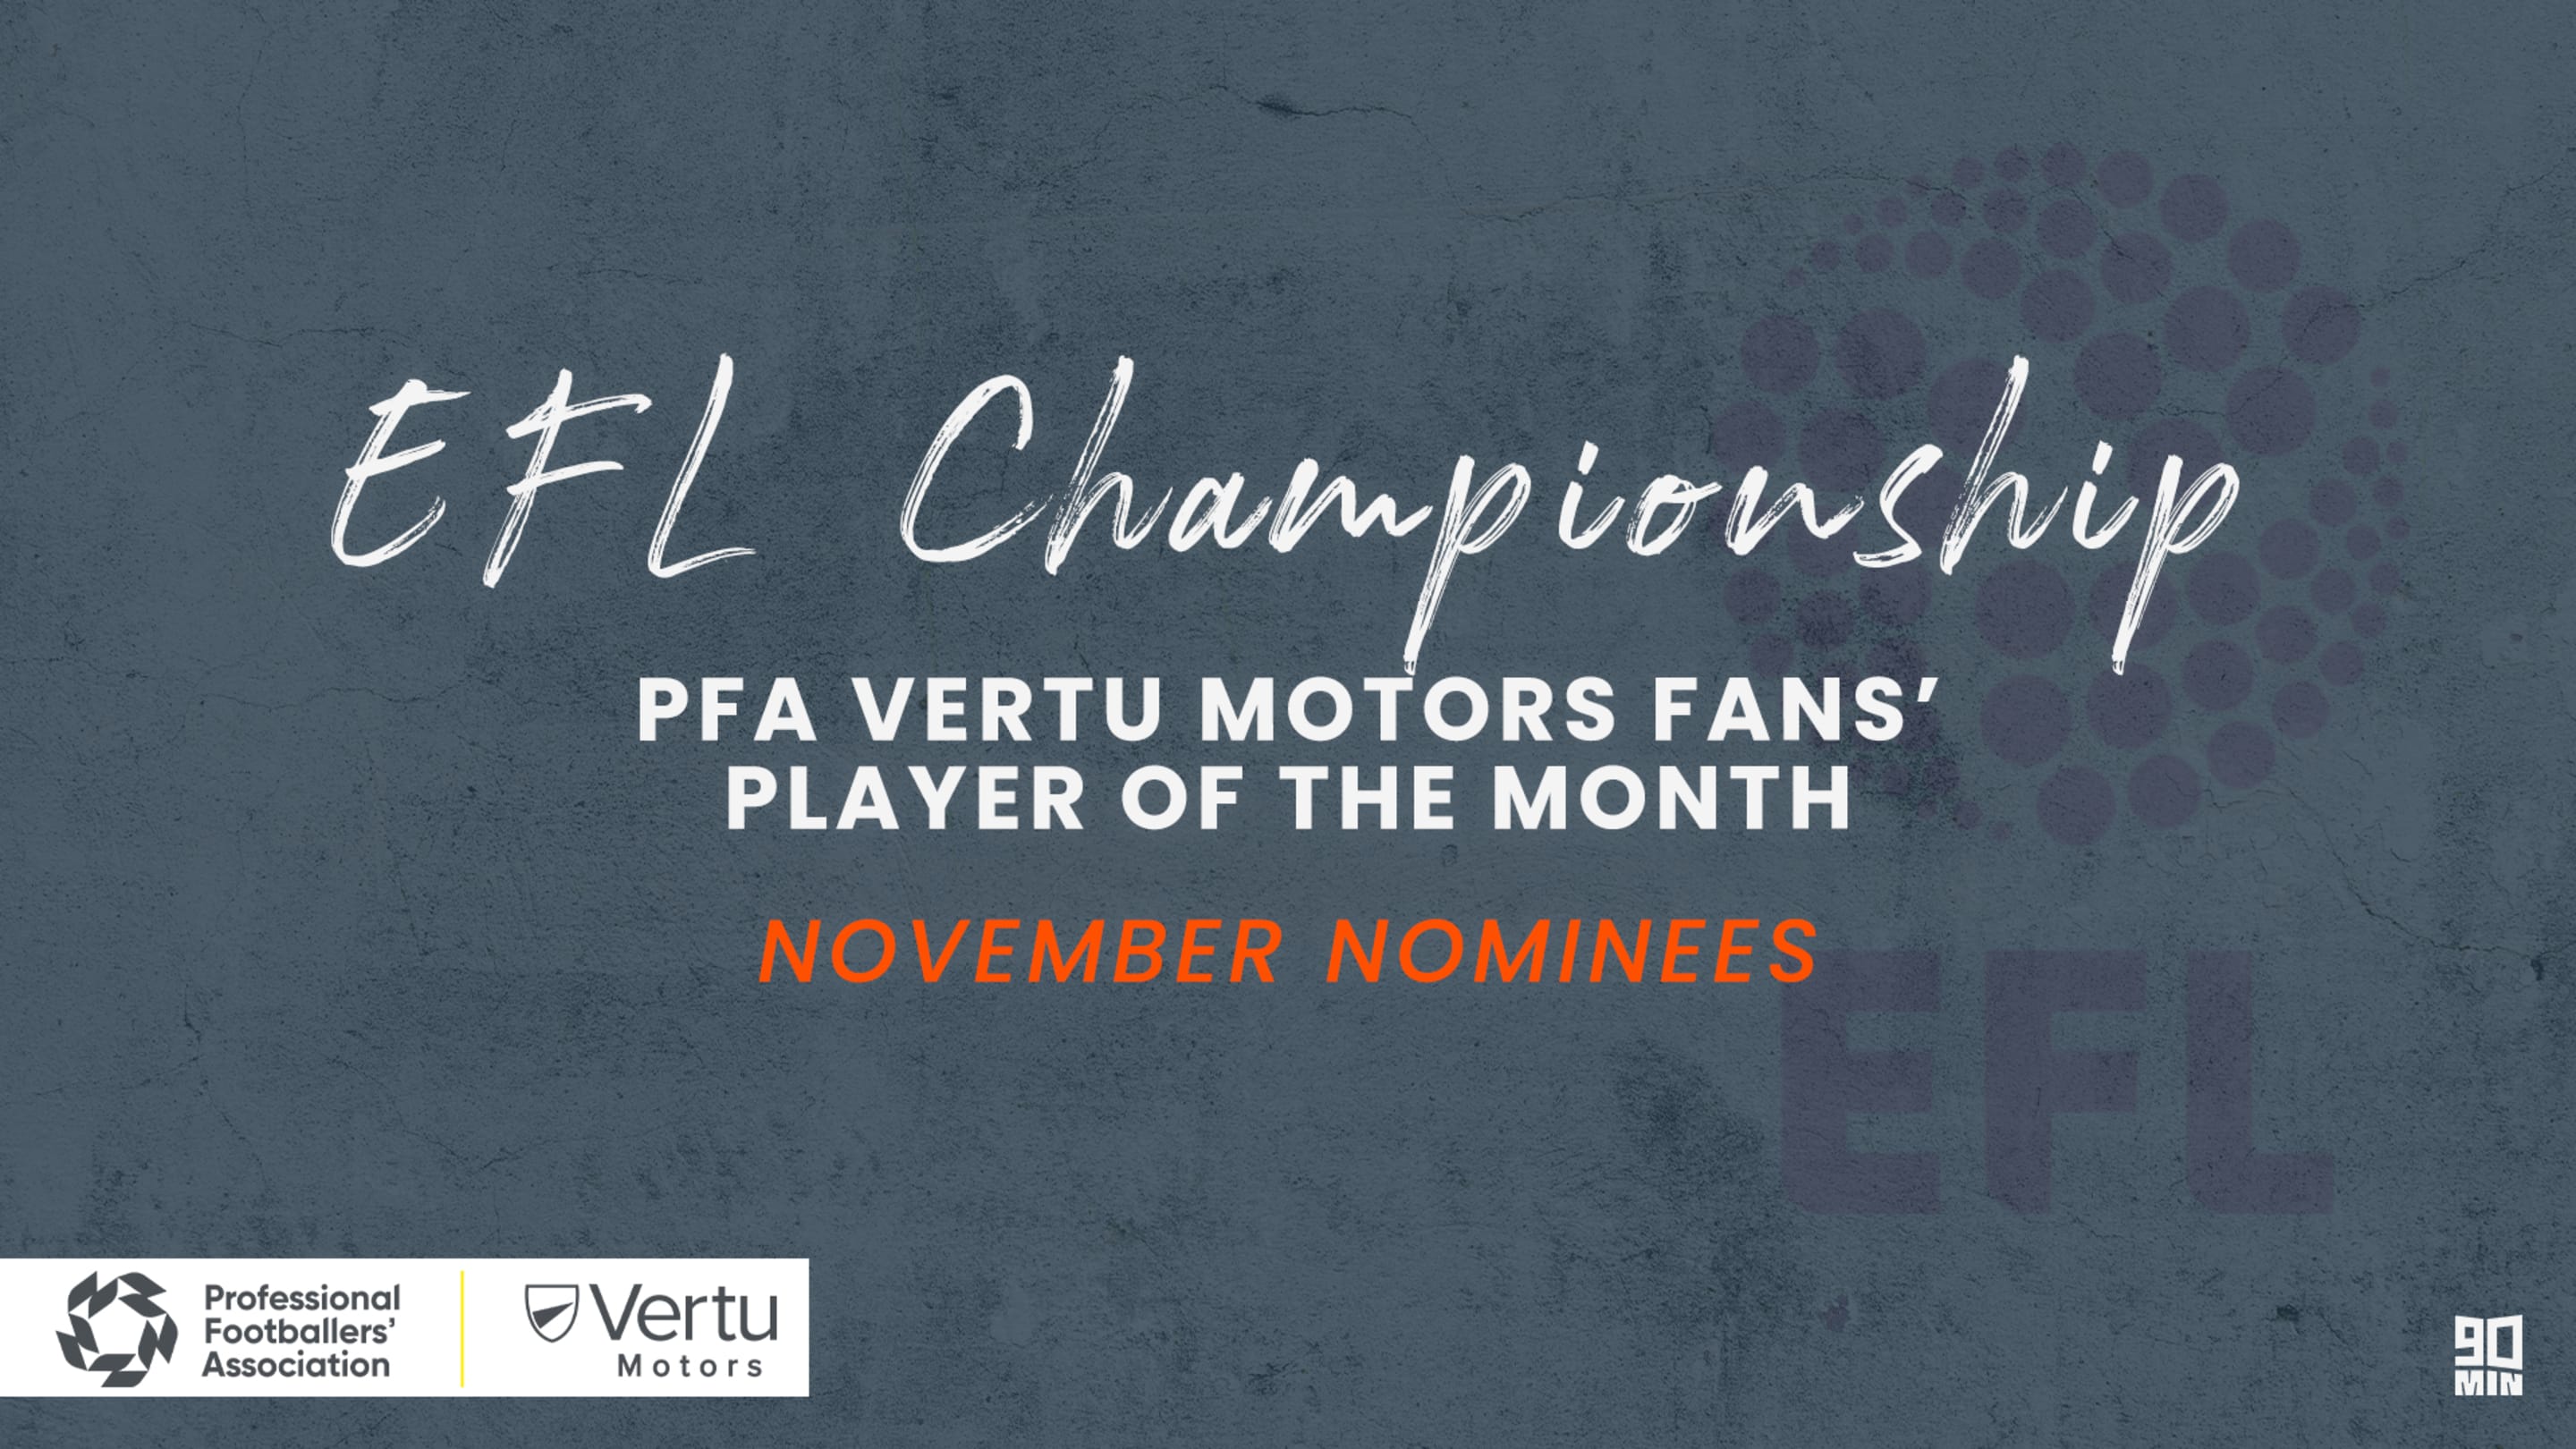 PFA Vertu Motors Championship Fans' Player of the Month - November nominees